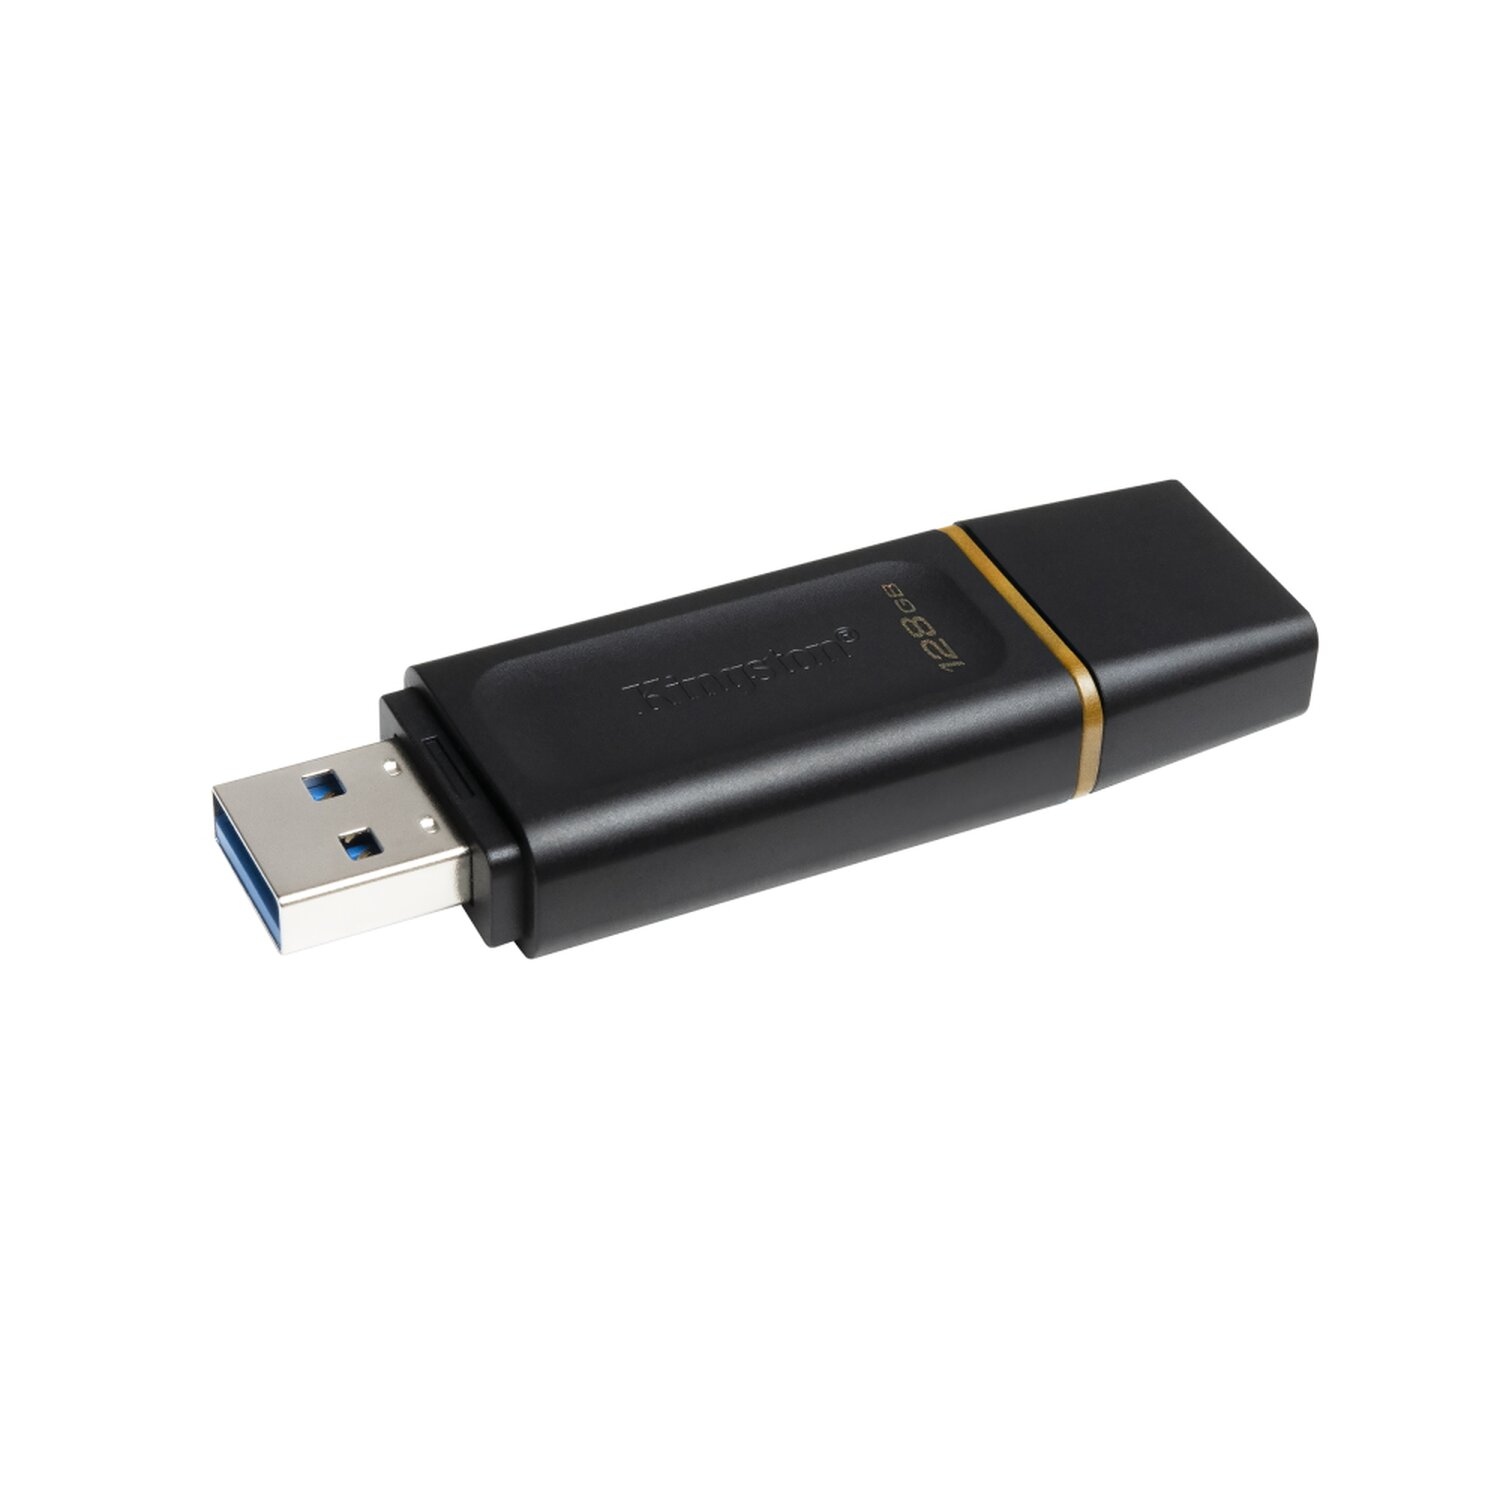 128 Stick Pendrive (Schwarz, USB KINGSTON GB)